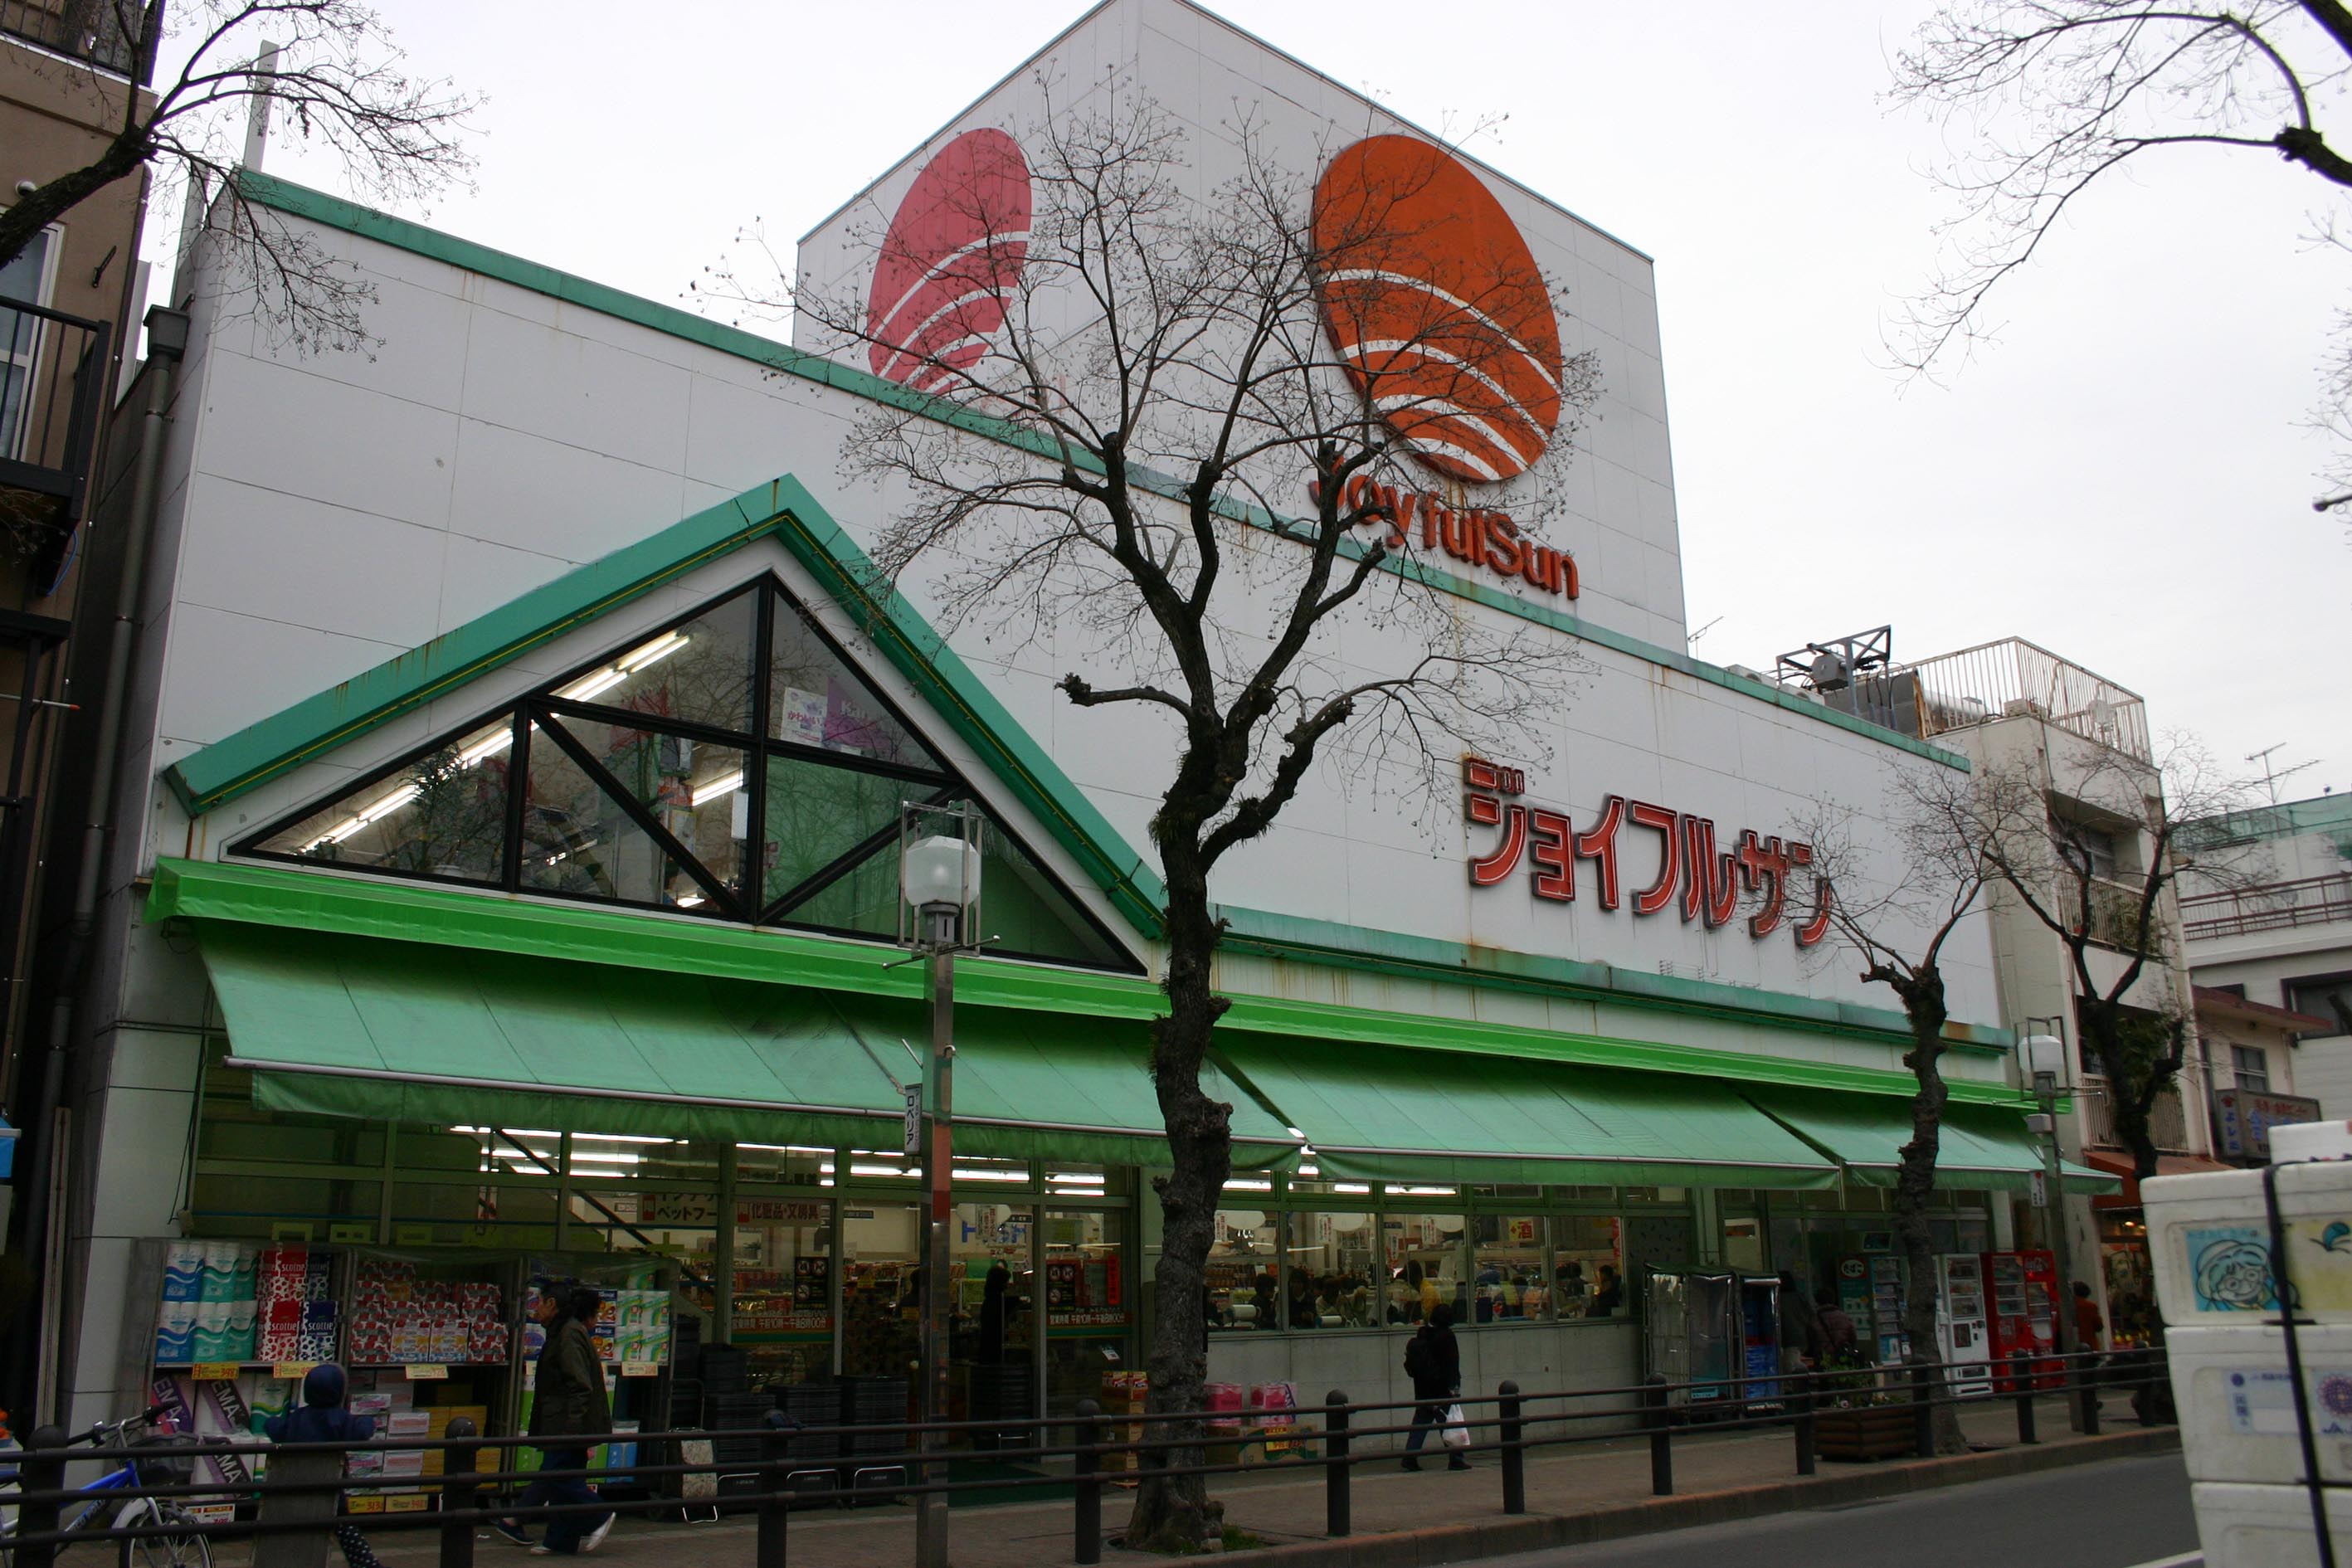 Supermarket. 637m until Joyful San Joei store (Super)